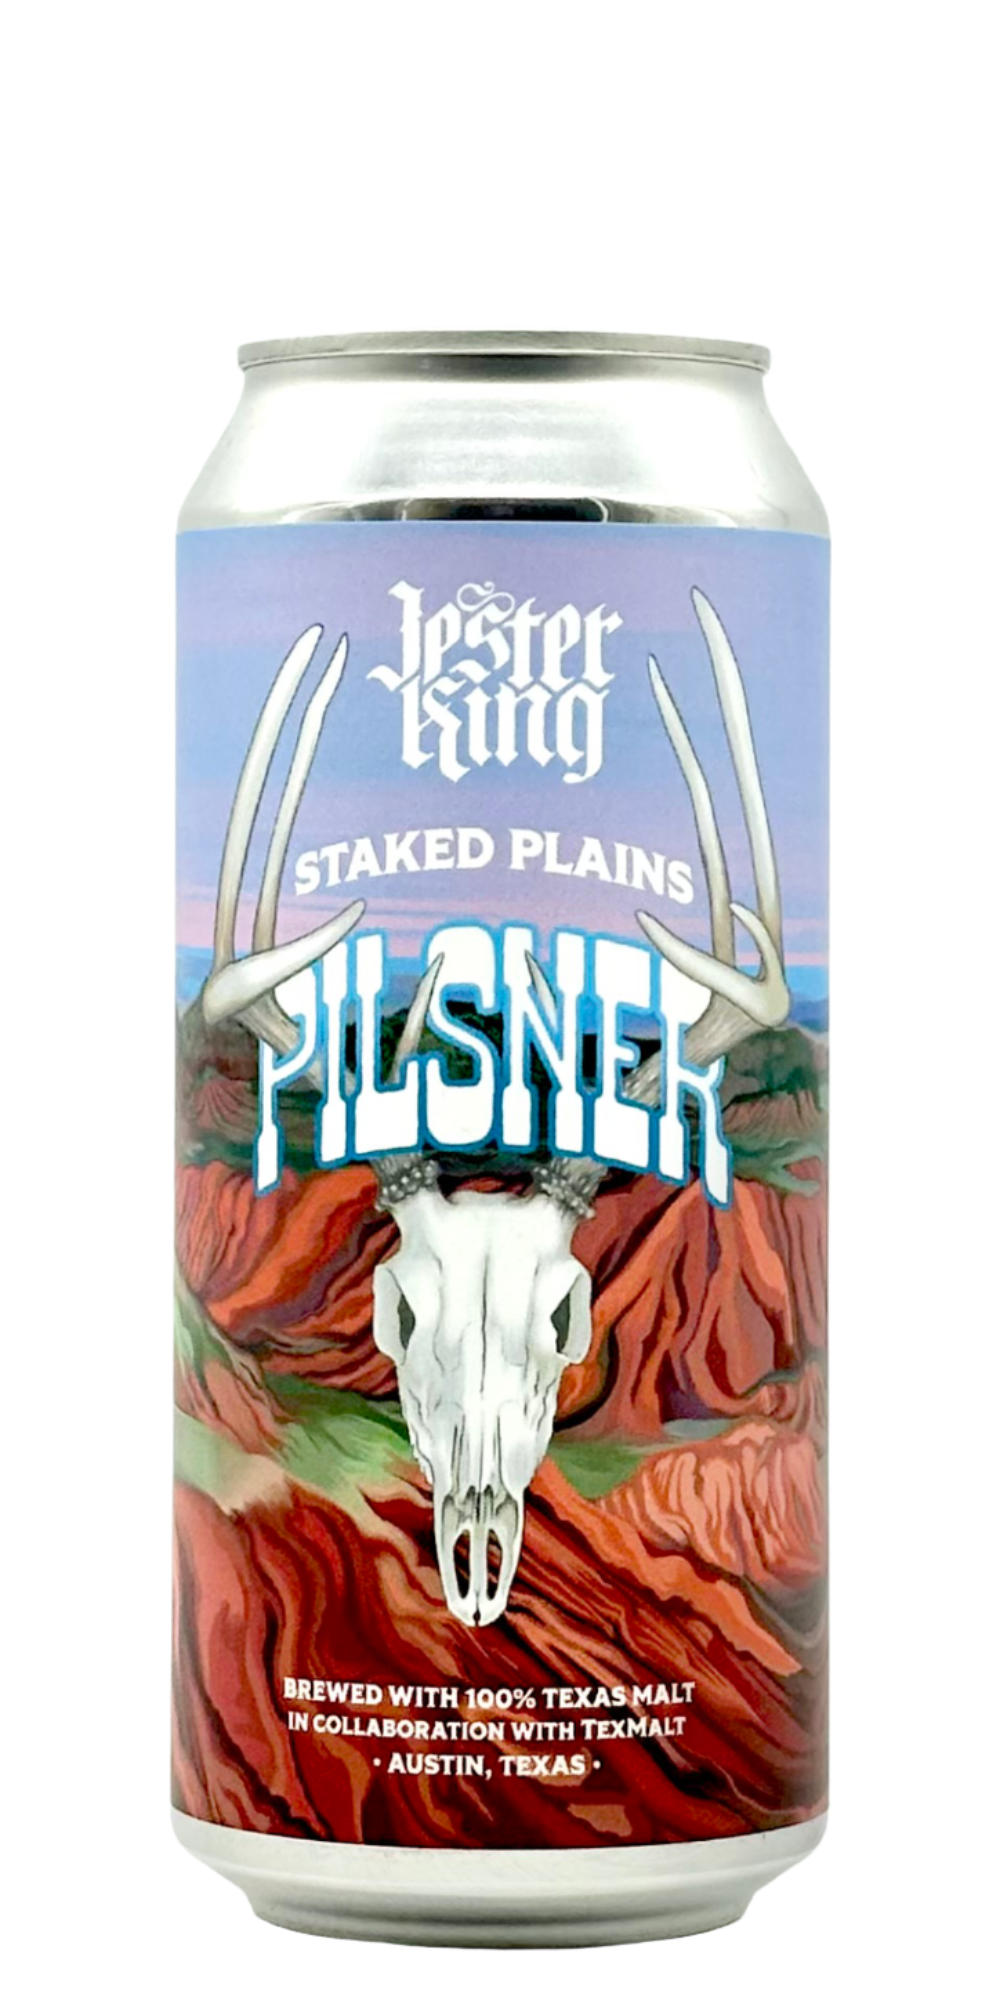 Jester King - Staked Plains Pilsner